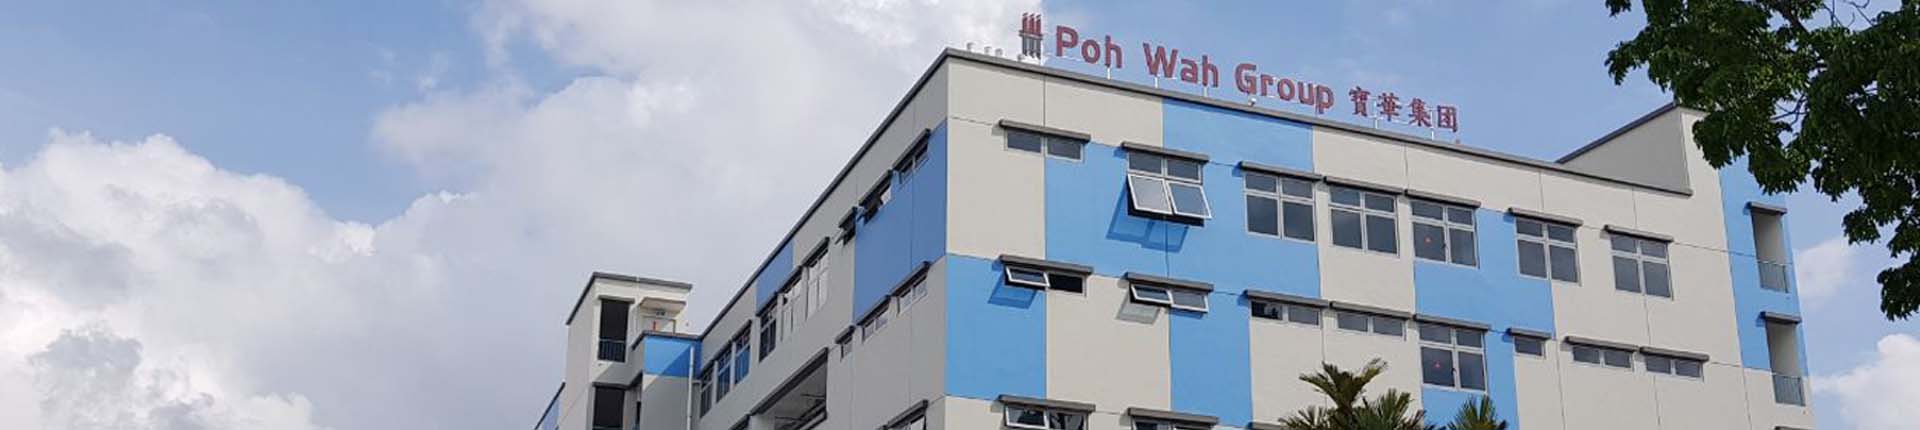 Poh Wah Equipment & Machinery Pte Ltd